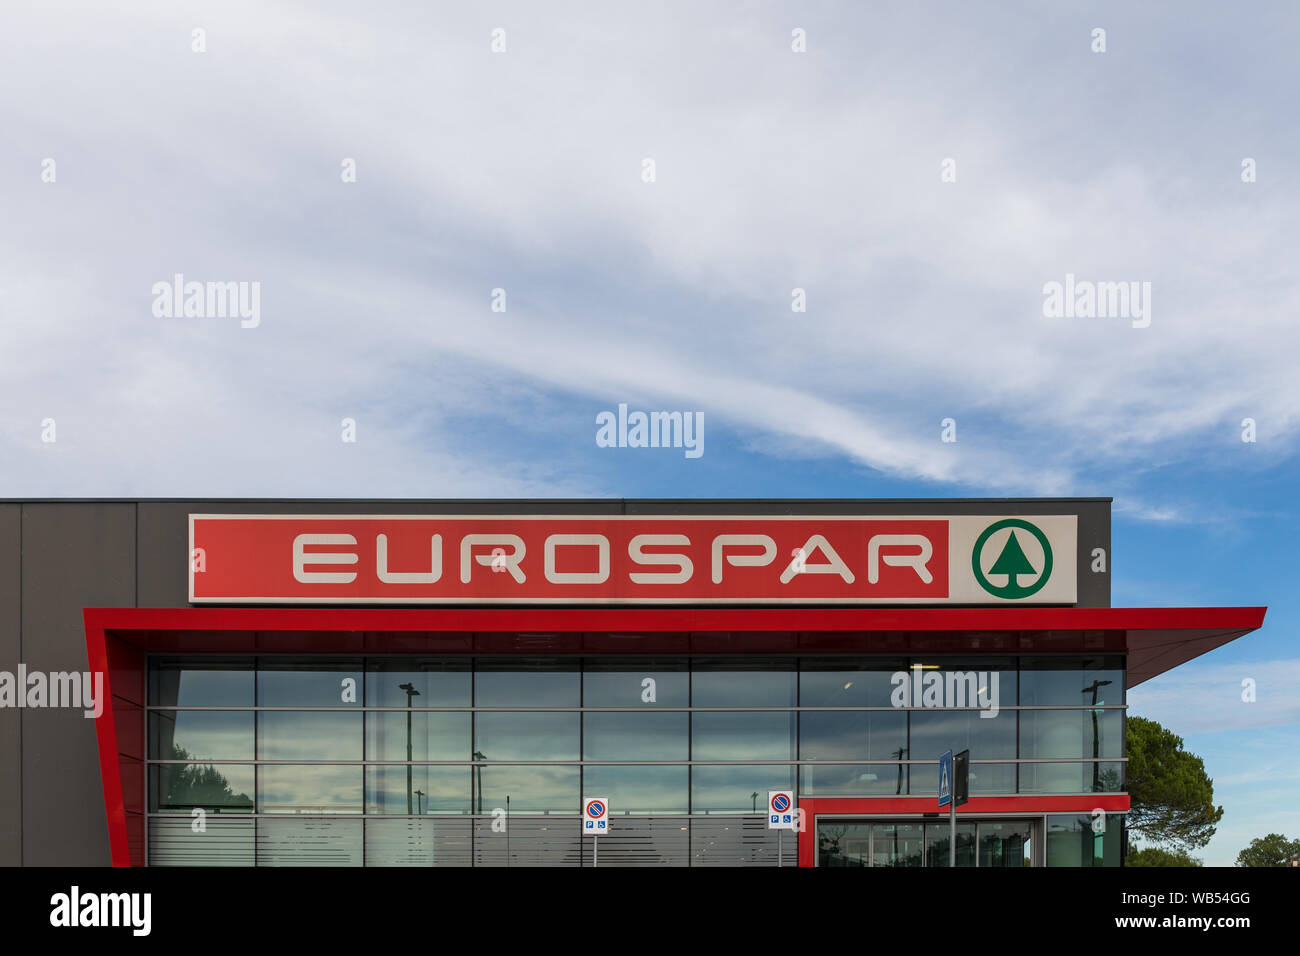 Eurospar supermarket sign, Eurospar logo Stock Photo